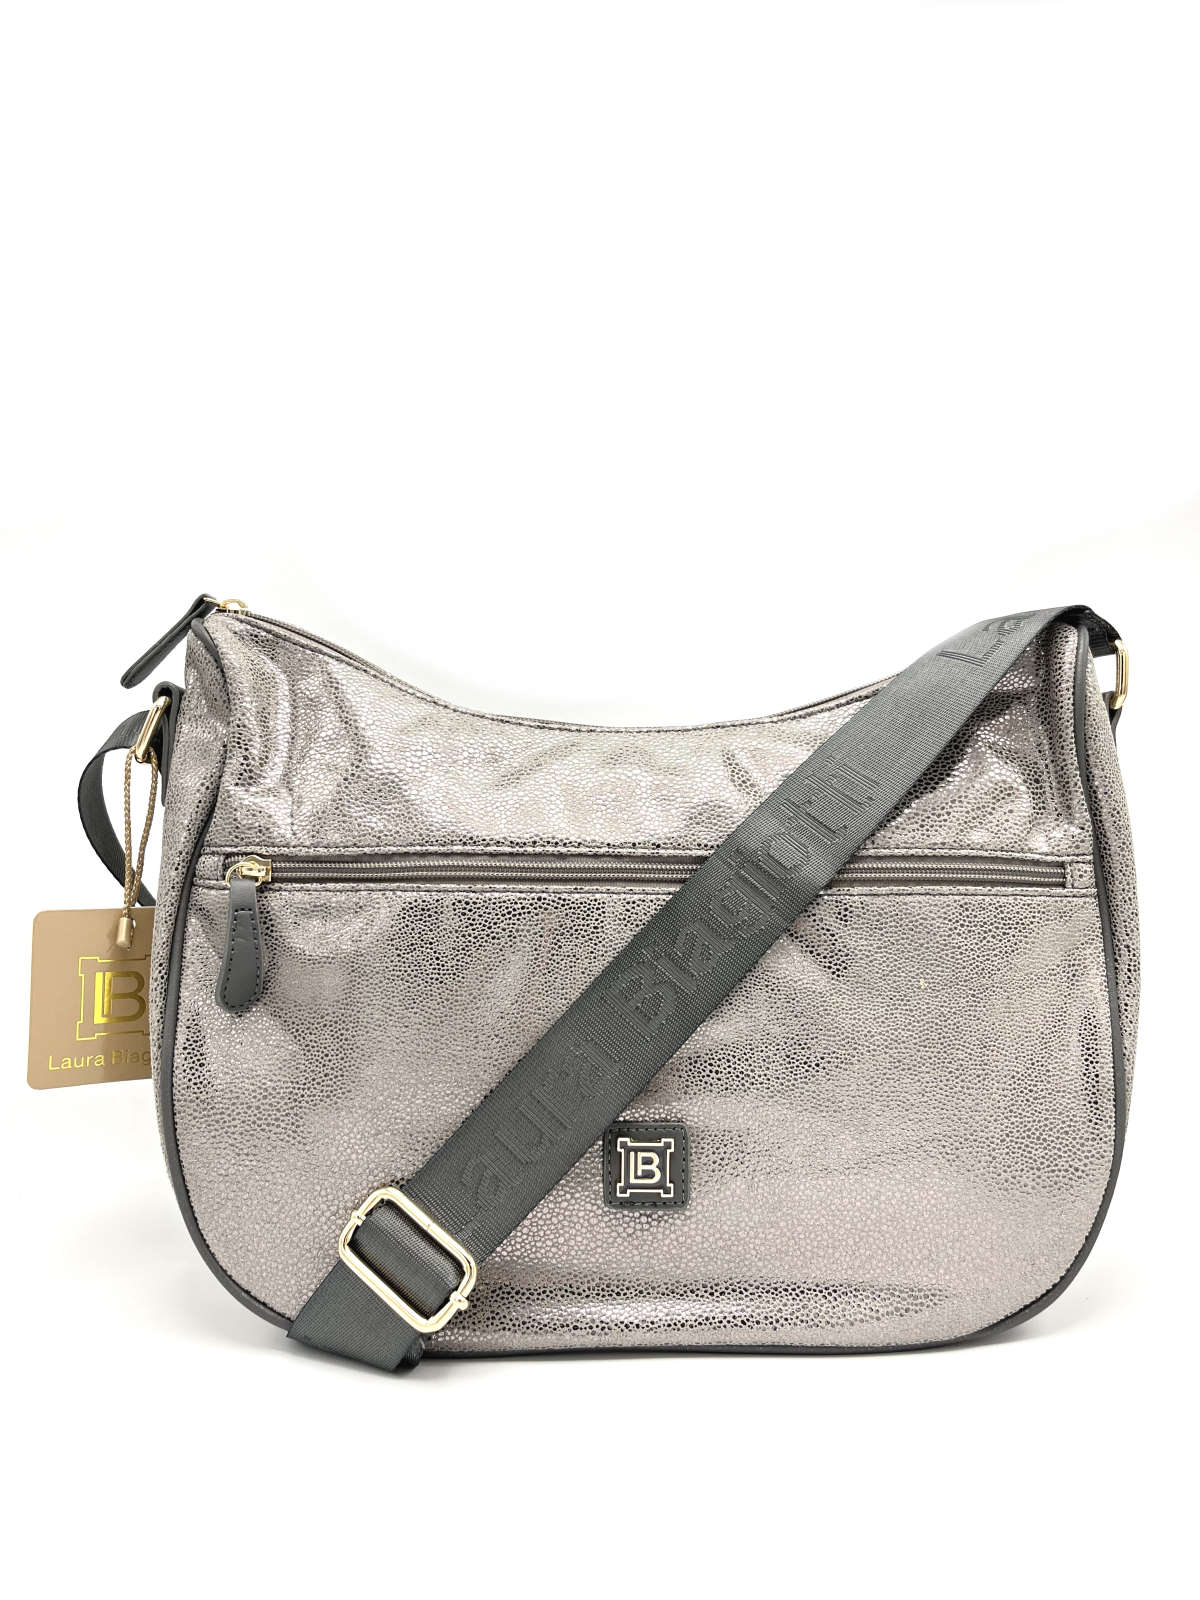 Shoulder bag, brand Laura Biagiotti, art. LB100-46.290